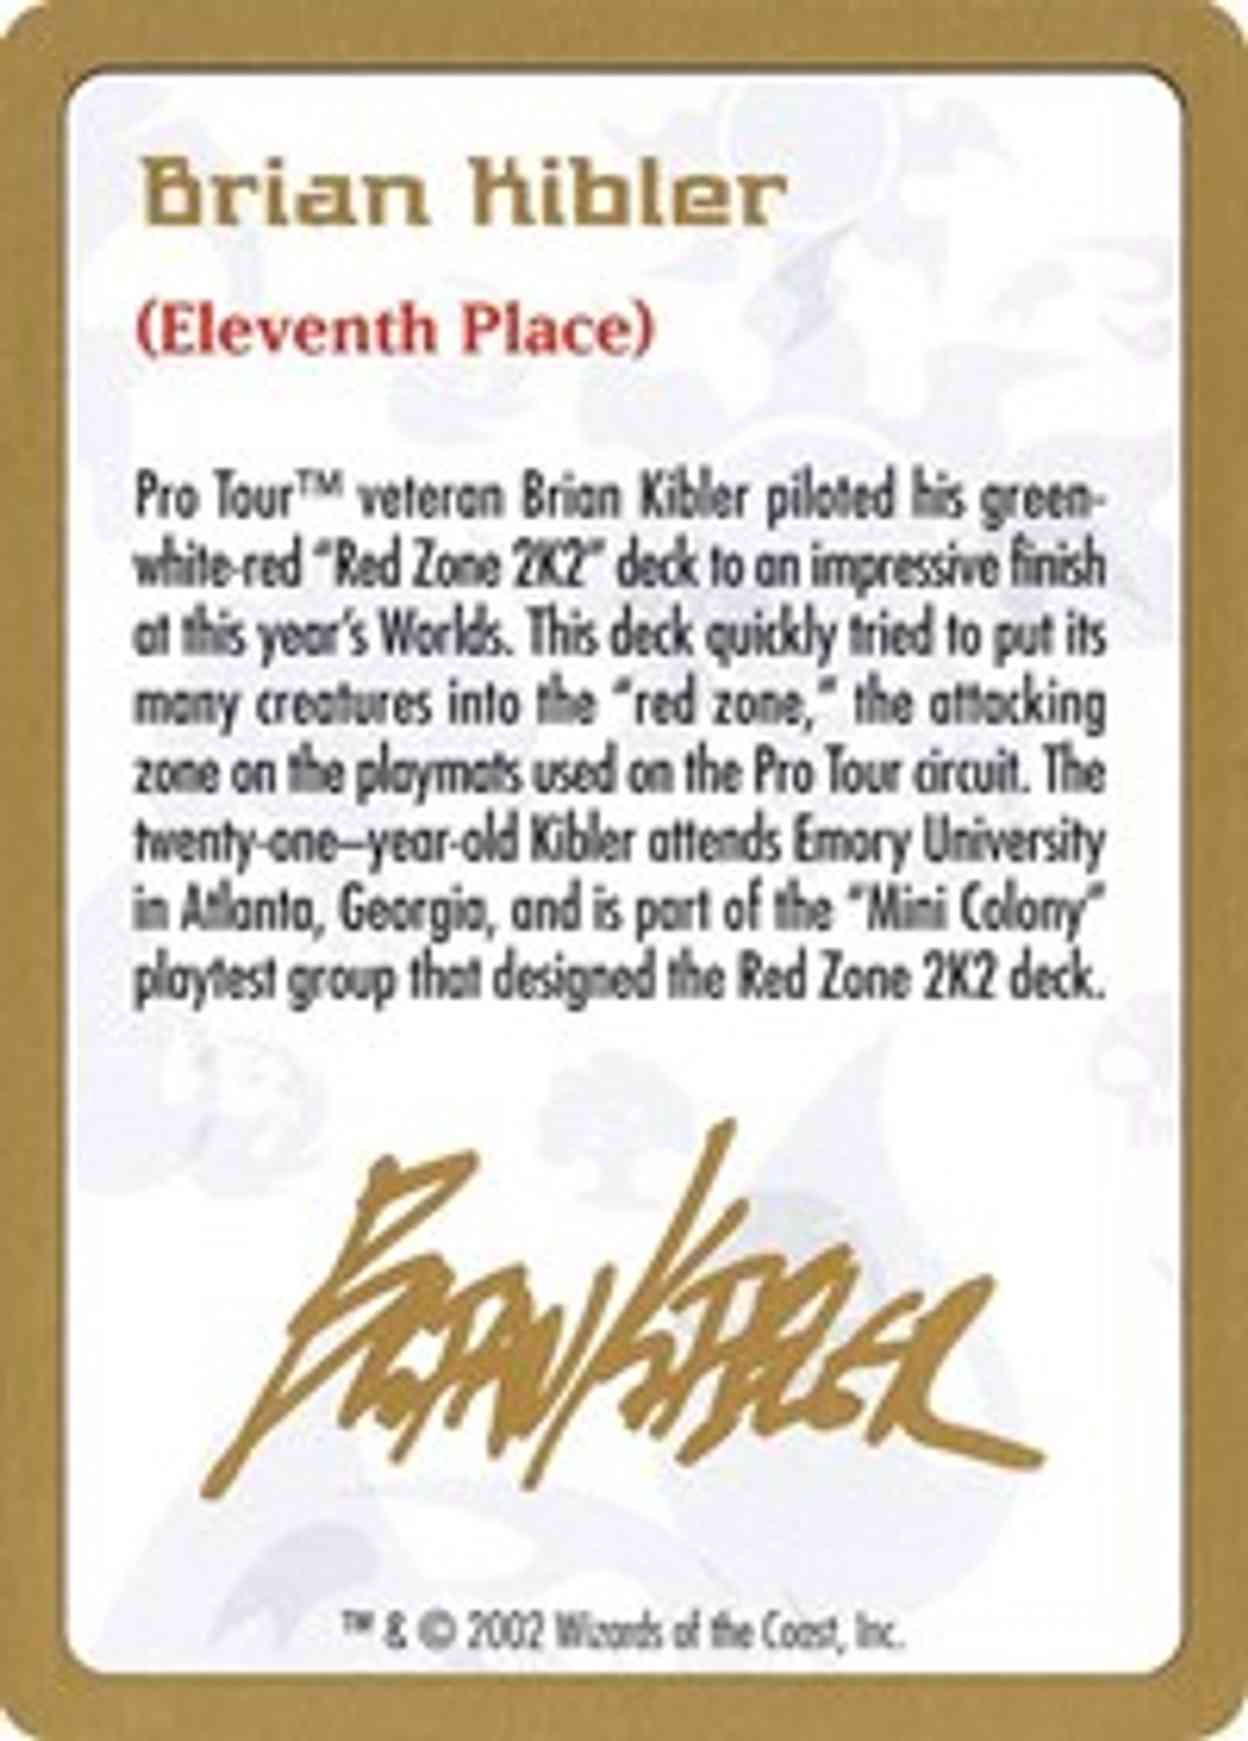 2002 Brian Kibler Biography Card magic card front